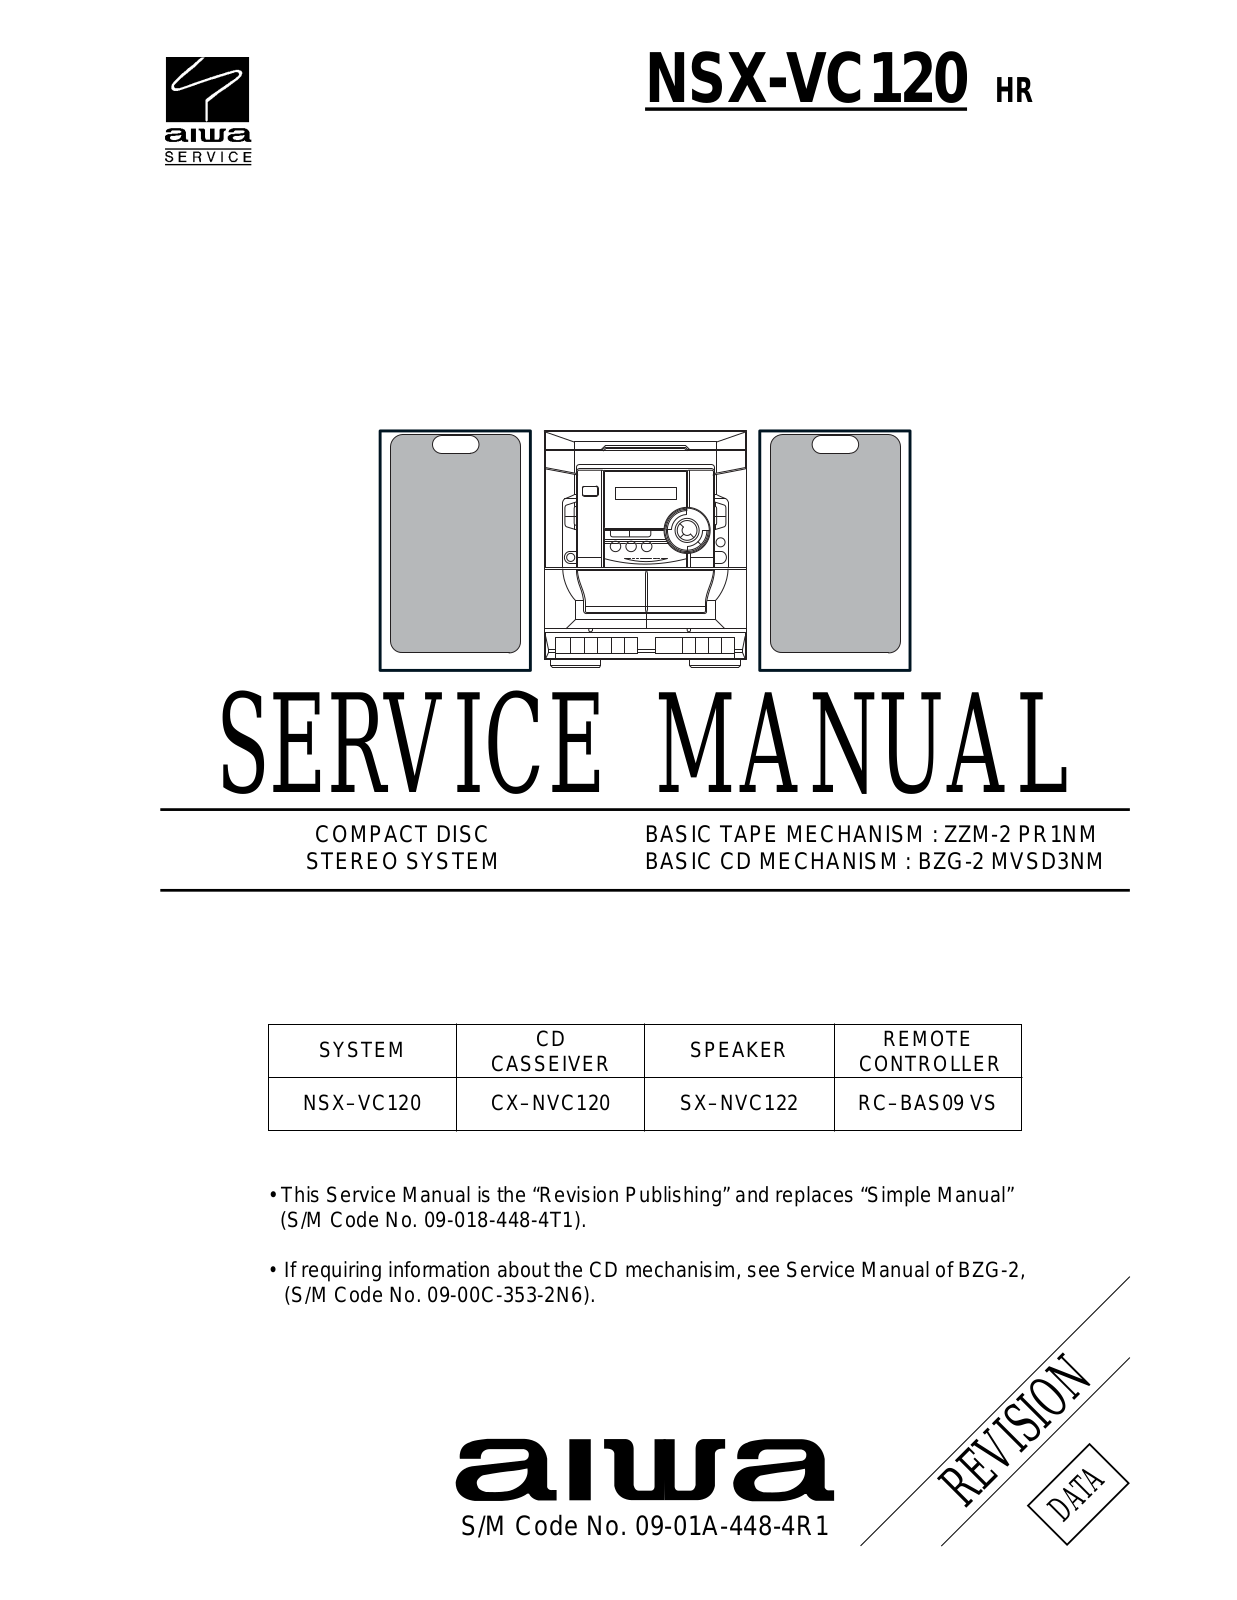 Aiwa NSX-VC120 Service Manual